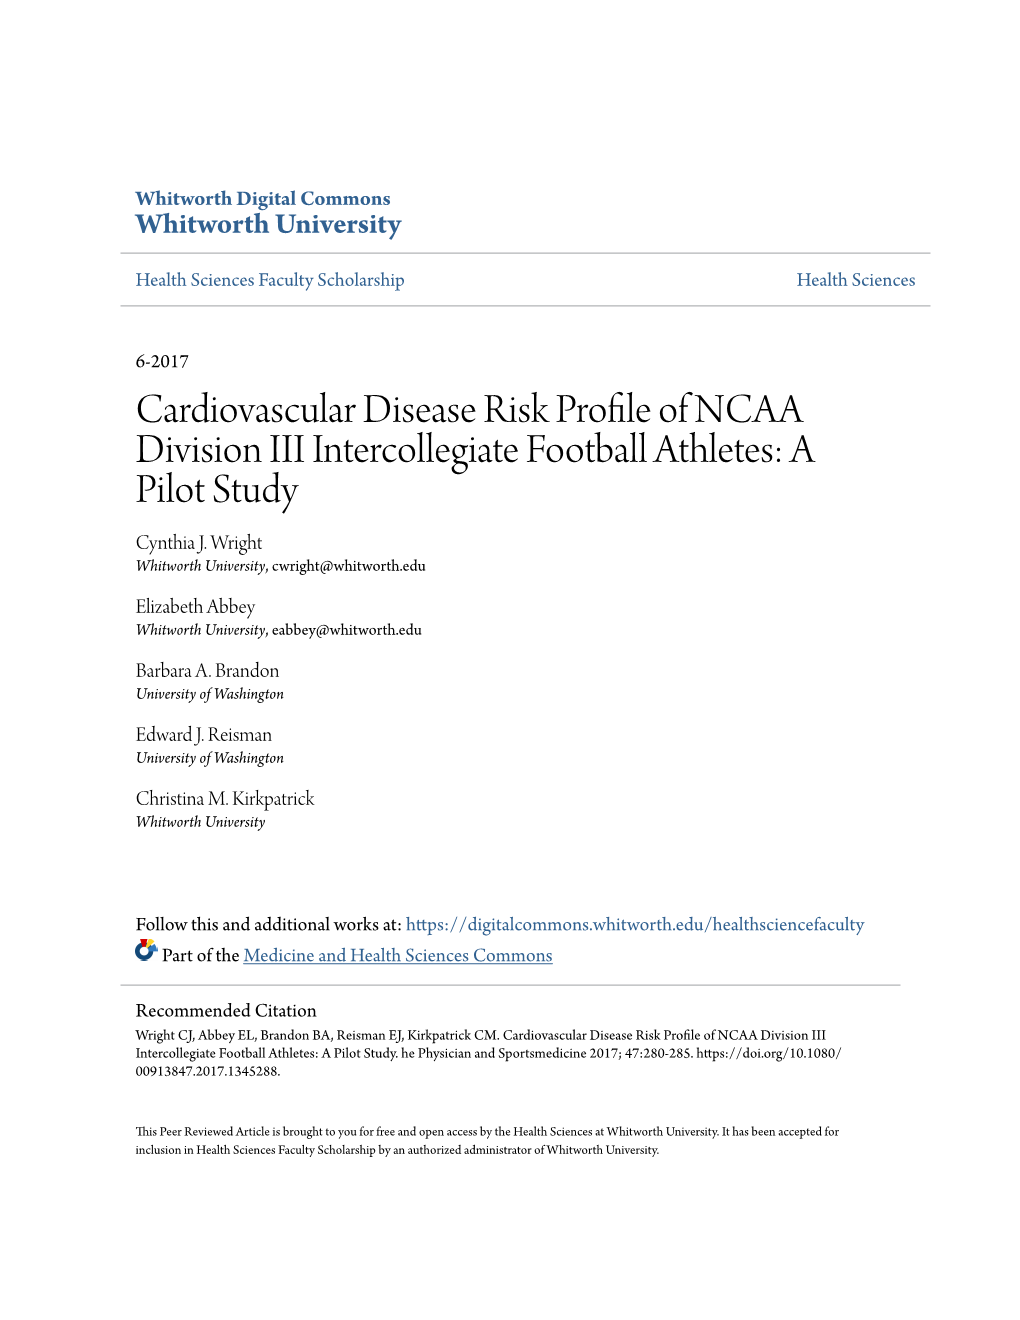 Cardiovascular Disease Risk Profile of NCAA Division III Intercollegiate Football Athletes: a Pilot Study Cynthia J